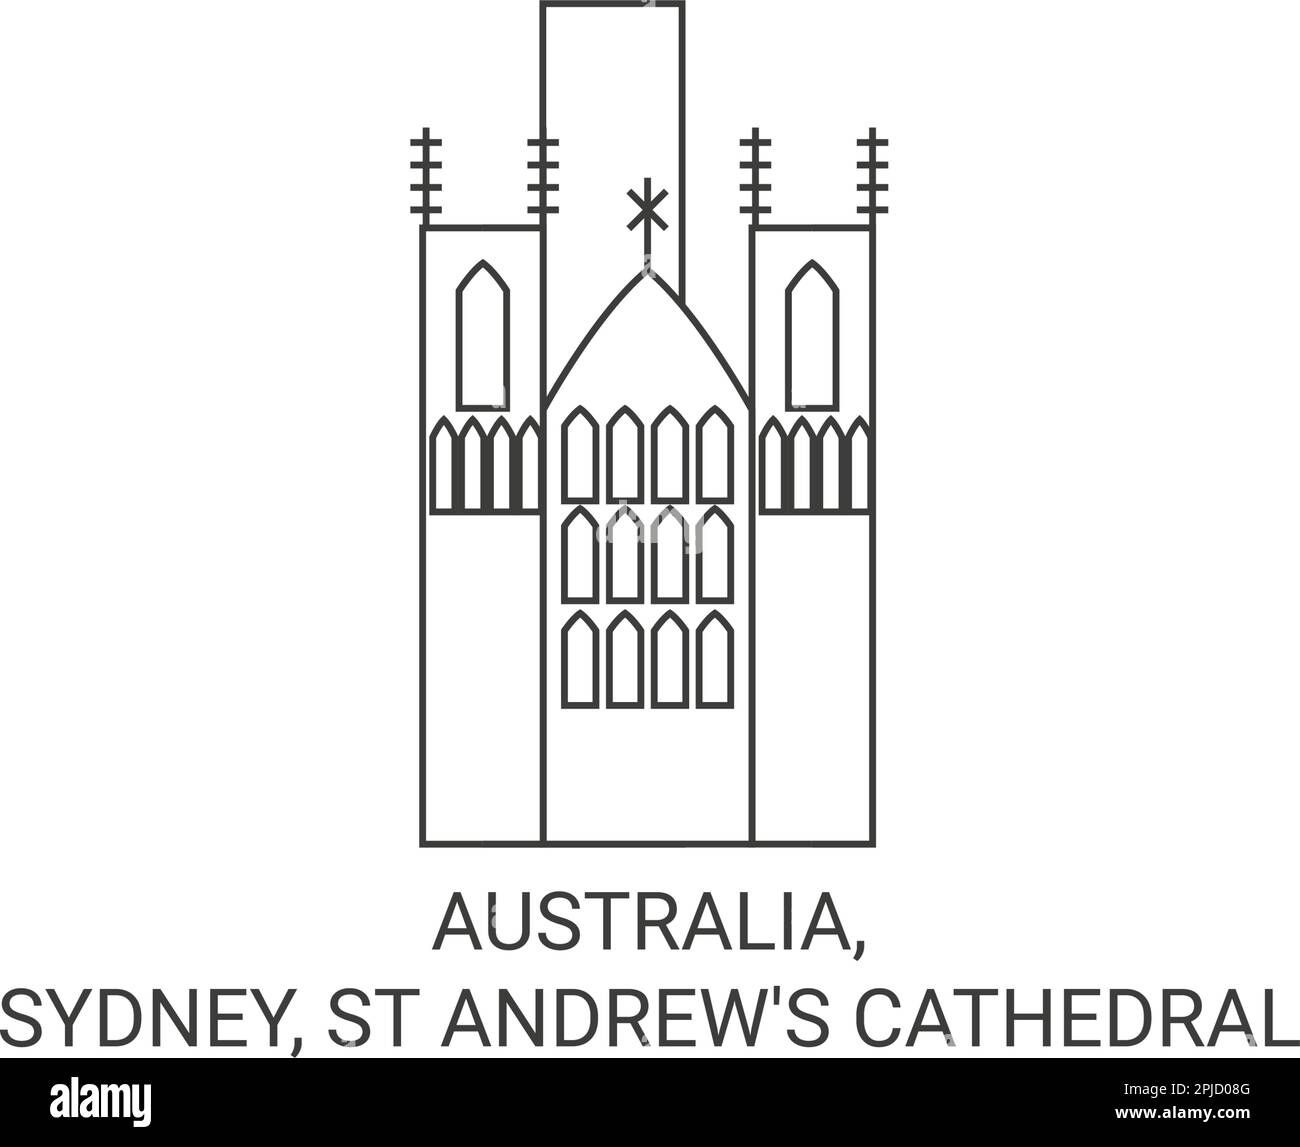 Australia, Sydney, St Andrew's Cathedral travel landmark vector illustration Stock Vector